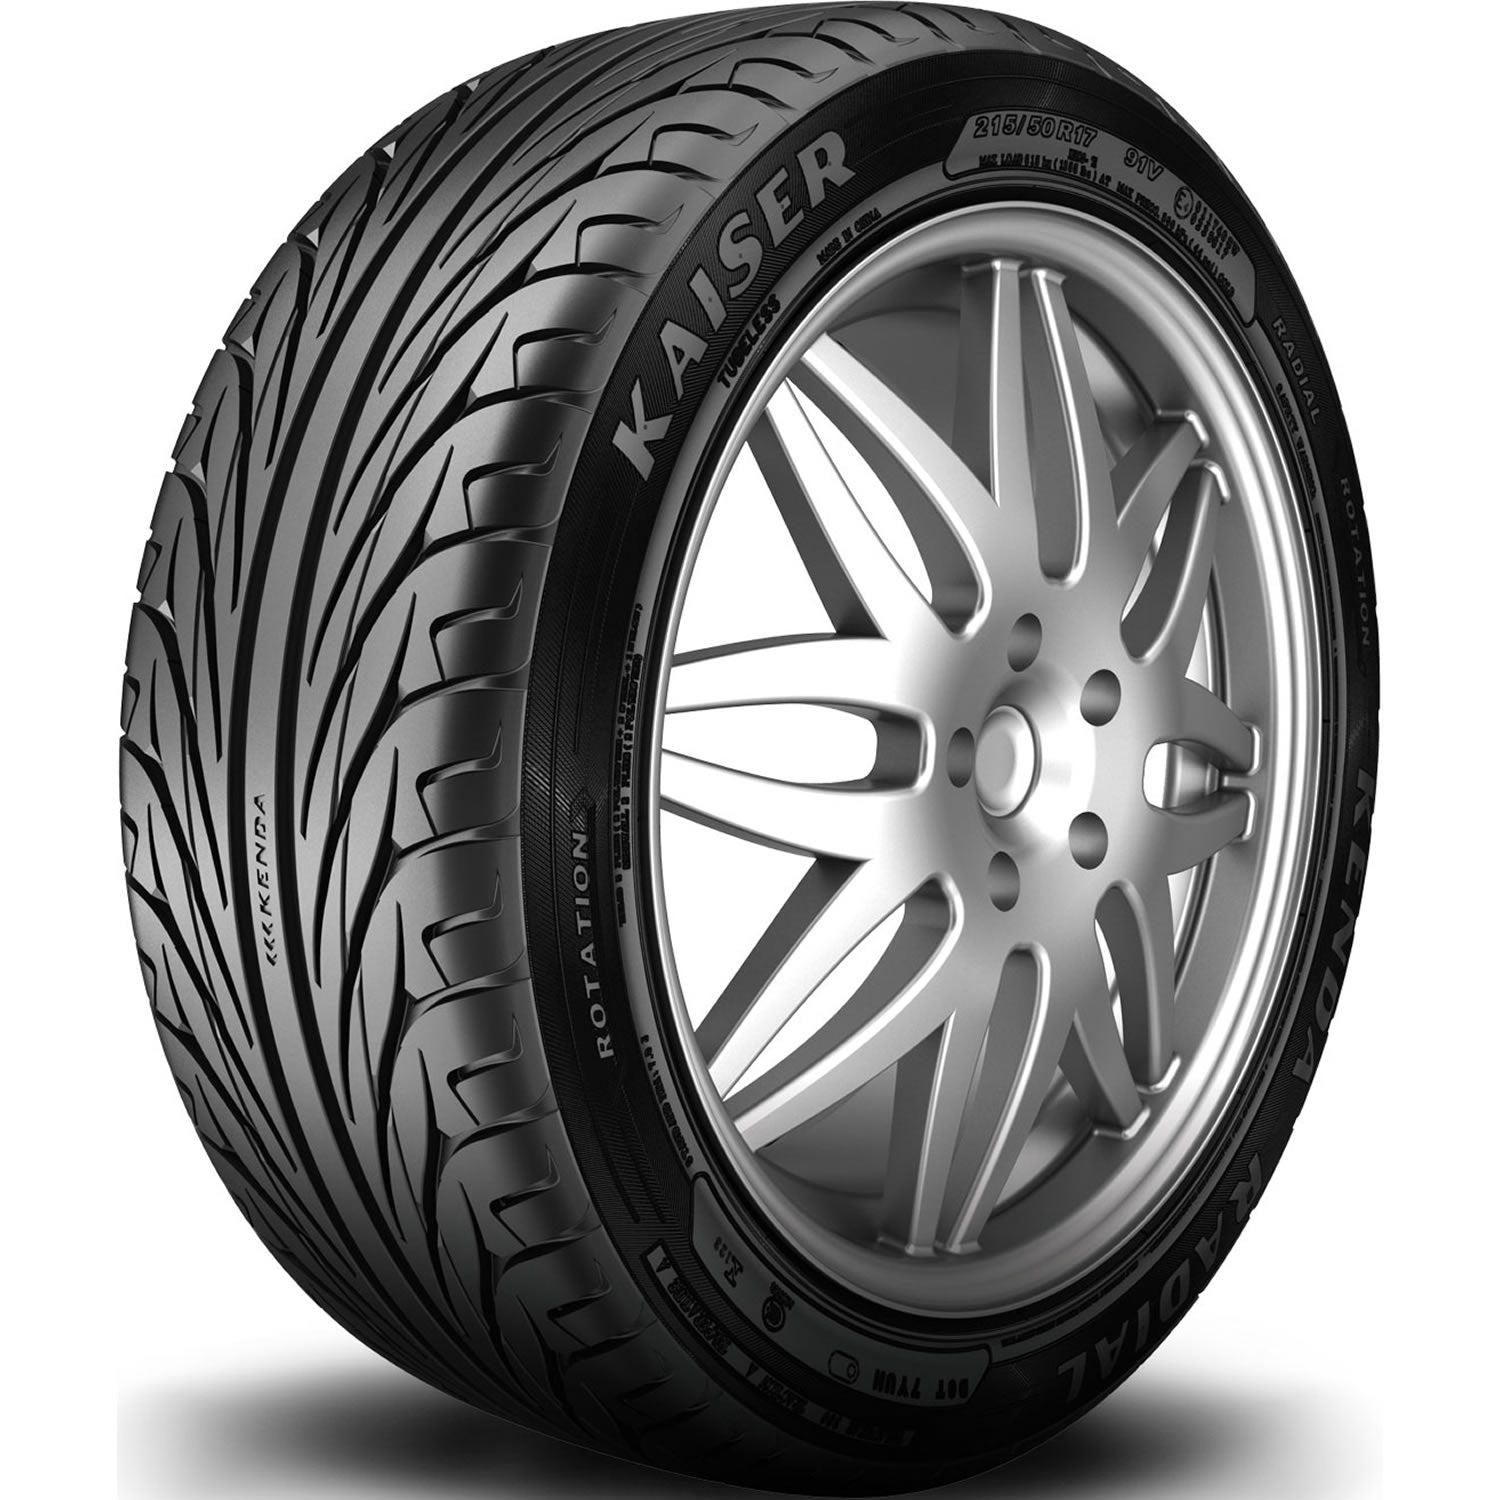 KENDA KAISER 245/40ZR17 (24.7X9.8R 17) Tires